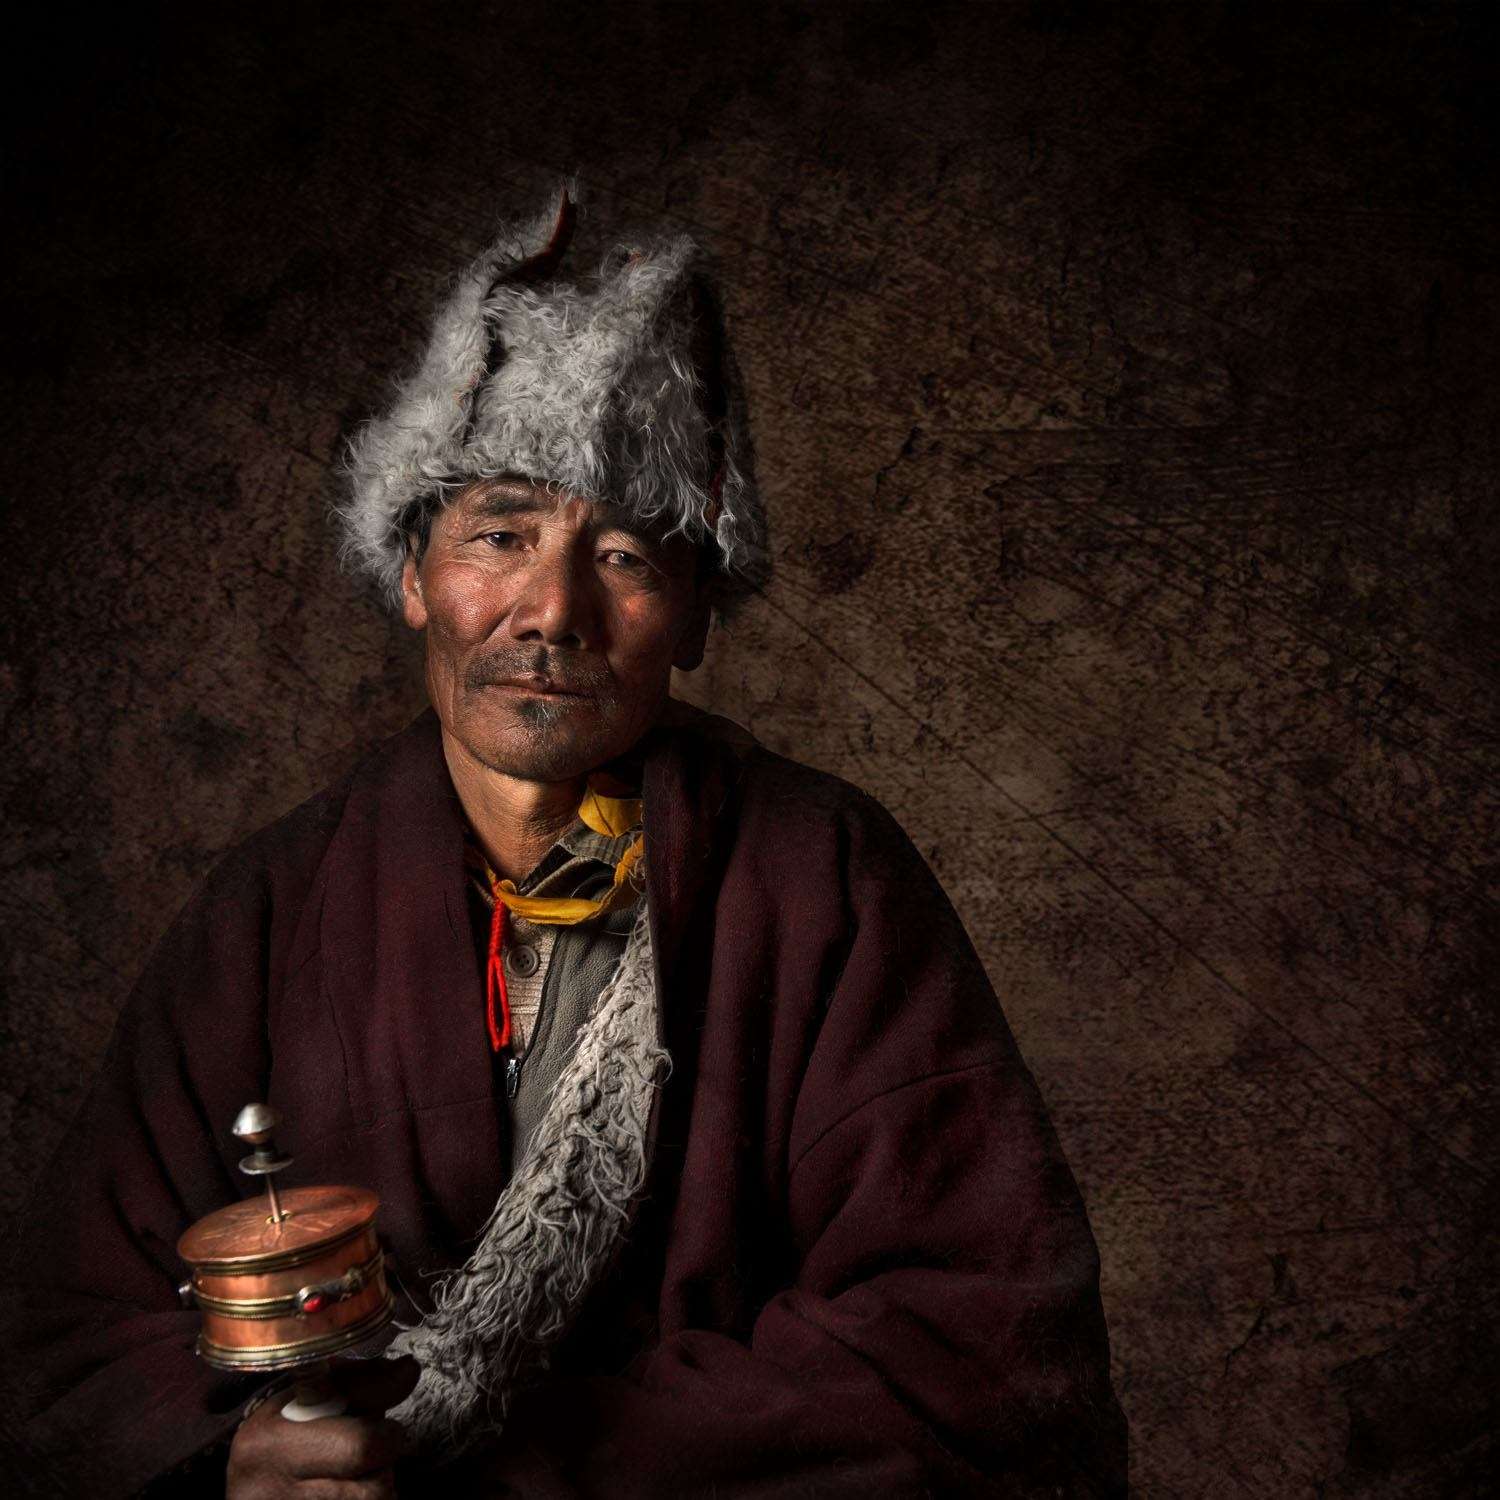 Portrait Photograph of local in Ladakh India taken by Ignacio Palacios